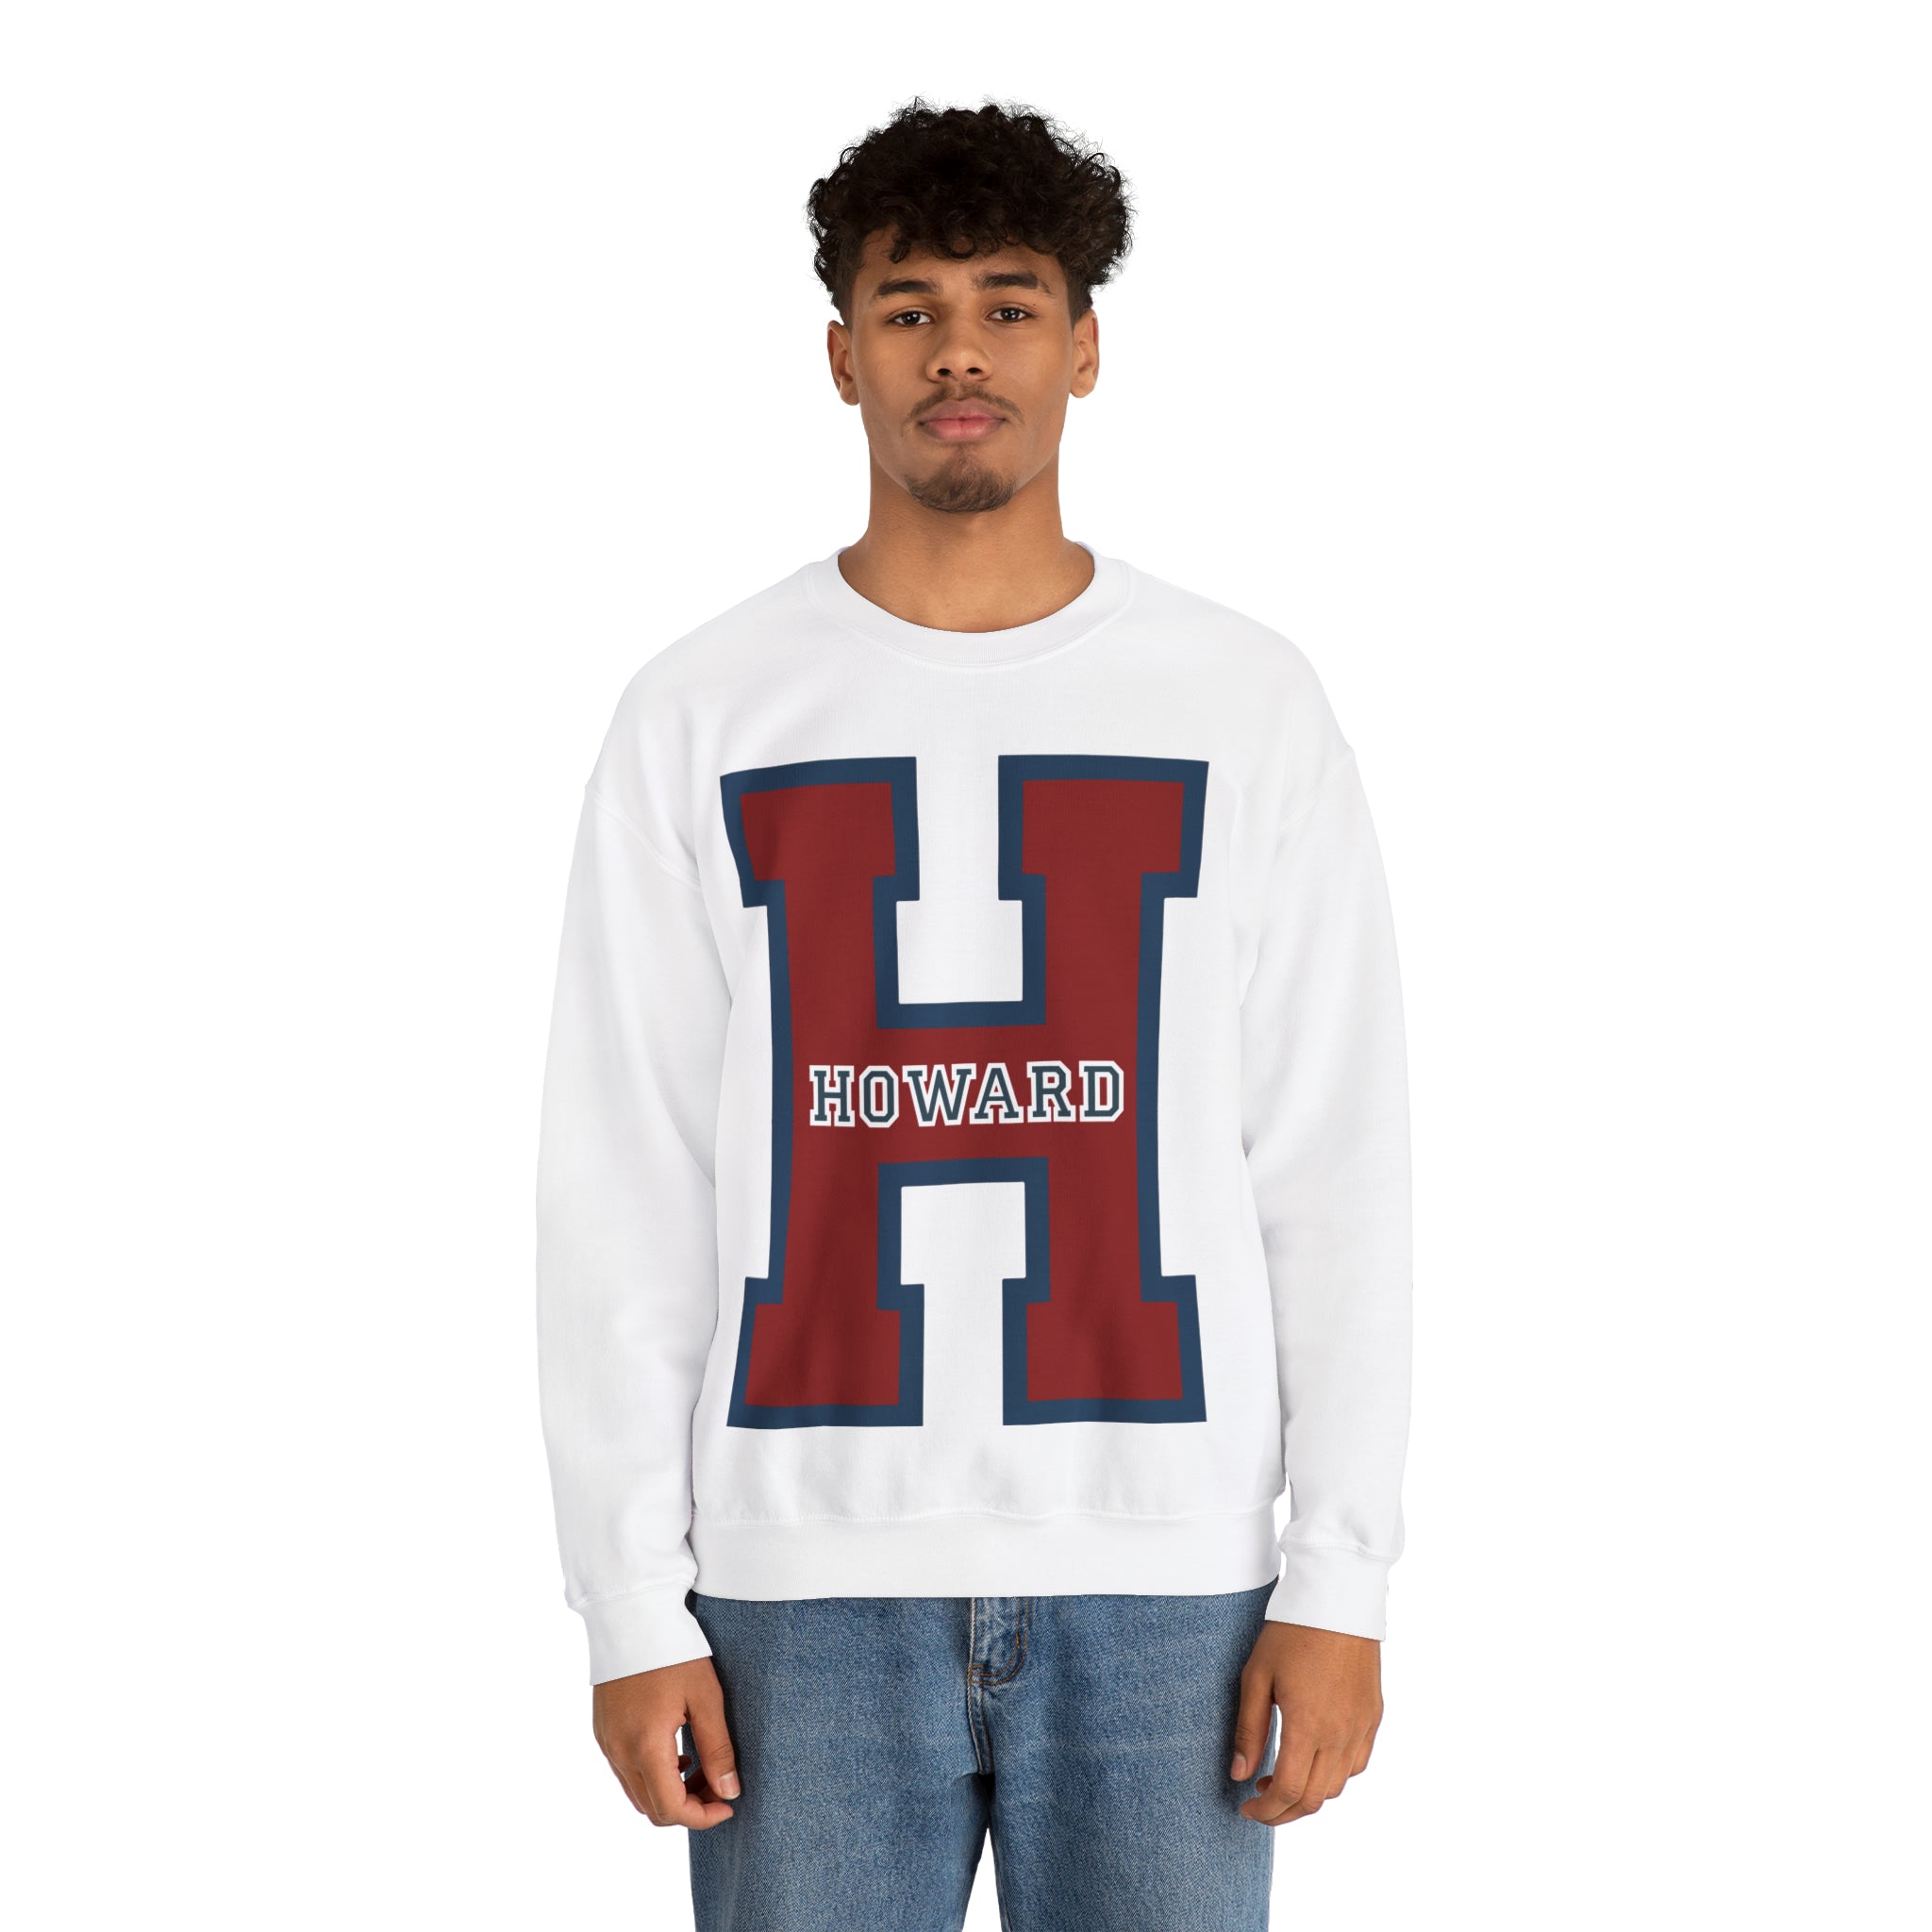 Big H Crewneck Sweatshirt